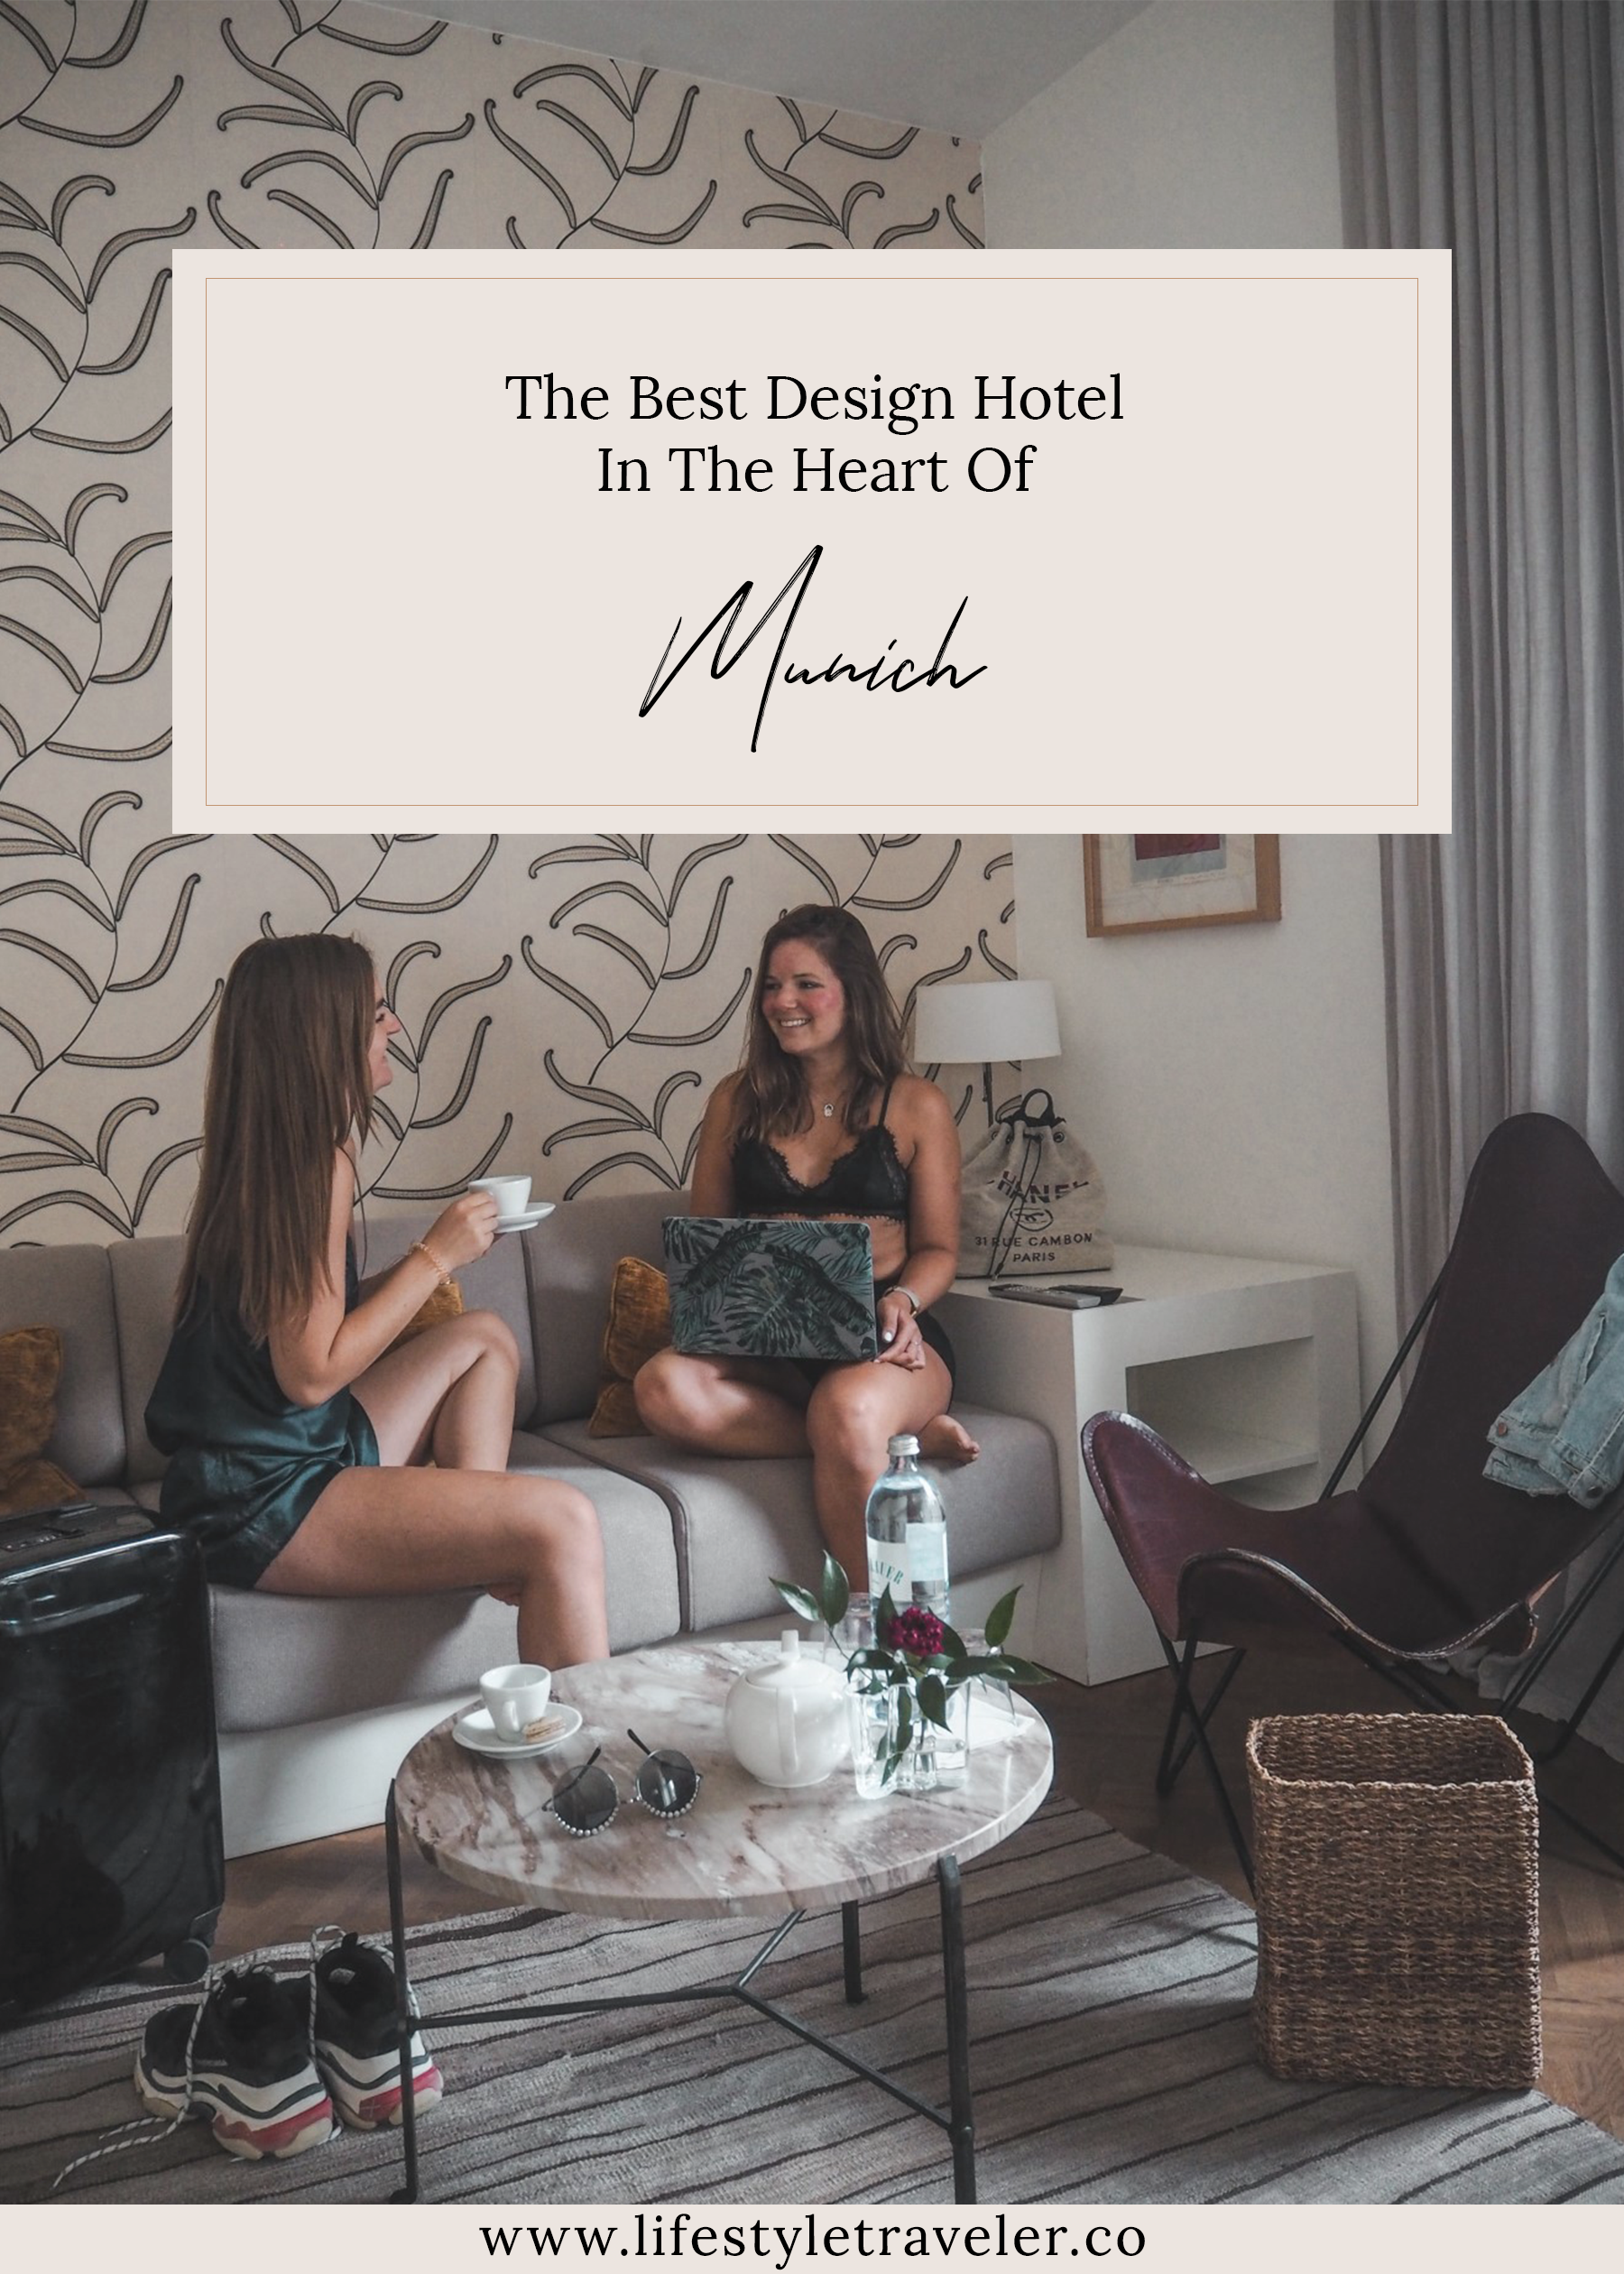 The Best Design Hotel In The Heart Of Munich | lifestyletraveler.co | IG: @lifestyletraveler.co